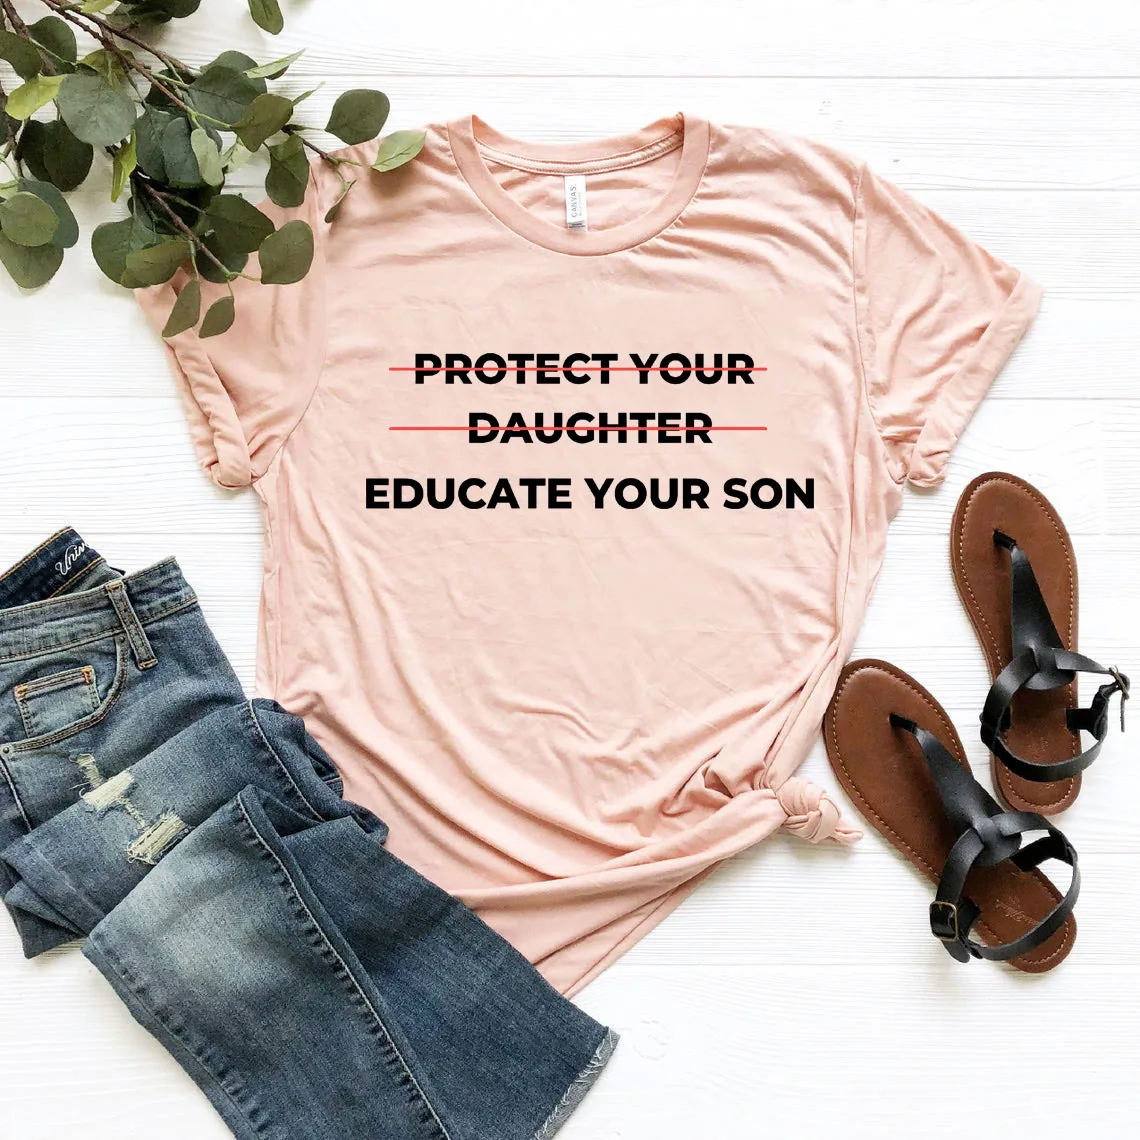 Feminist Shirt,Educate Your Son,Women Empowerment,Too Many Women,Human Rights shirt,Ruth Bader Ginsburg,Girl Power,feminism Resistance Shirt